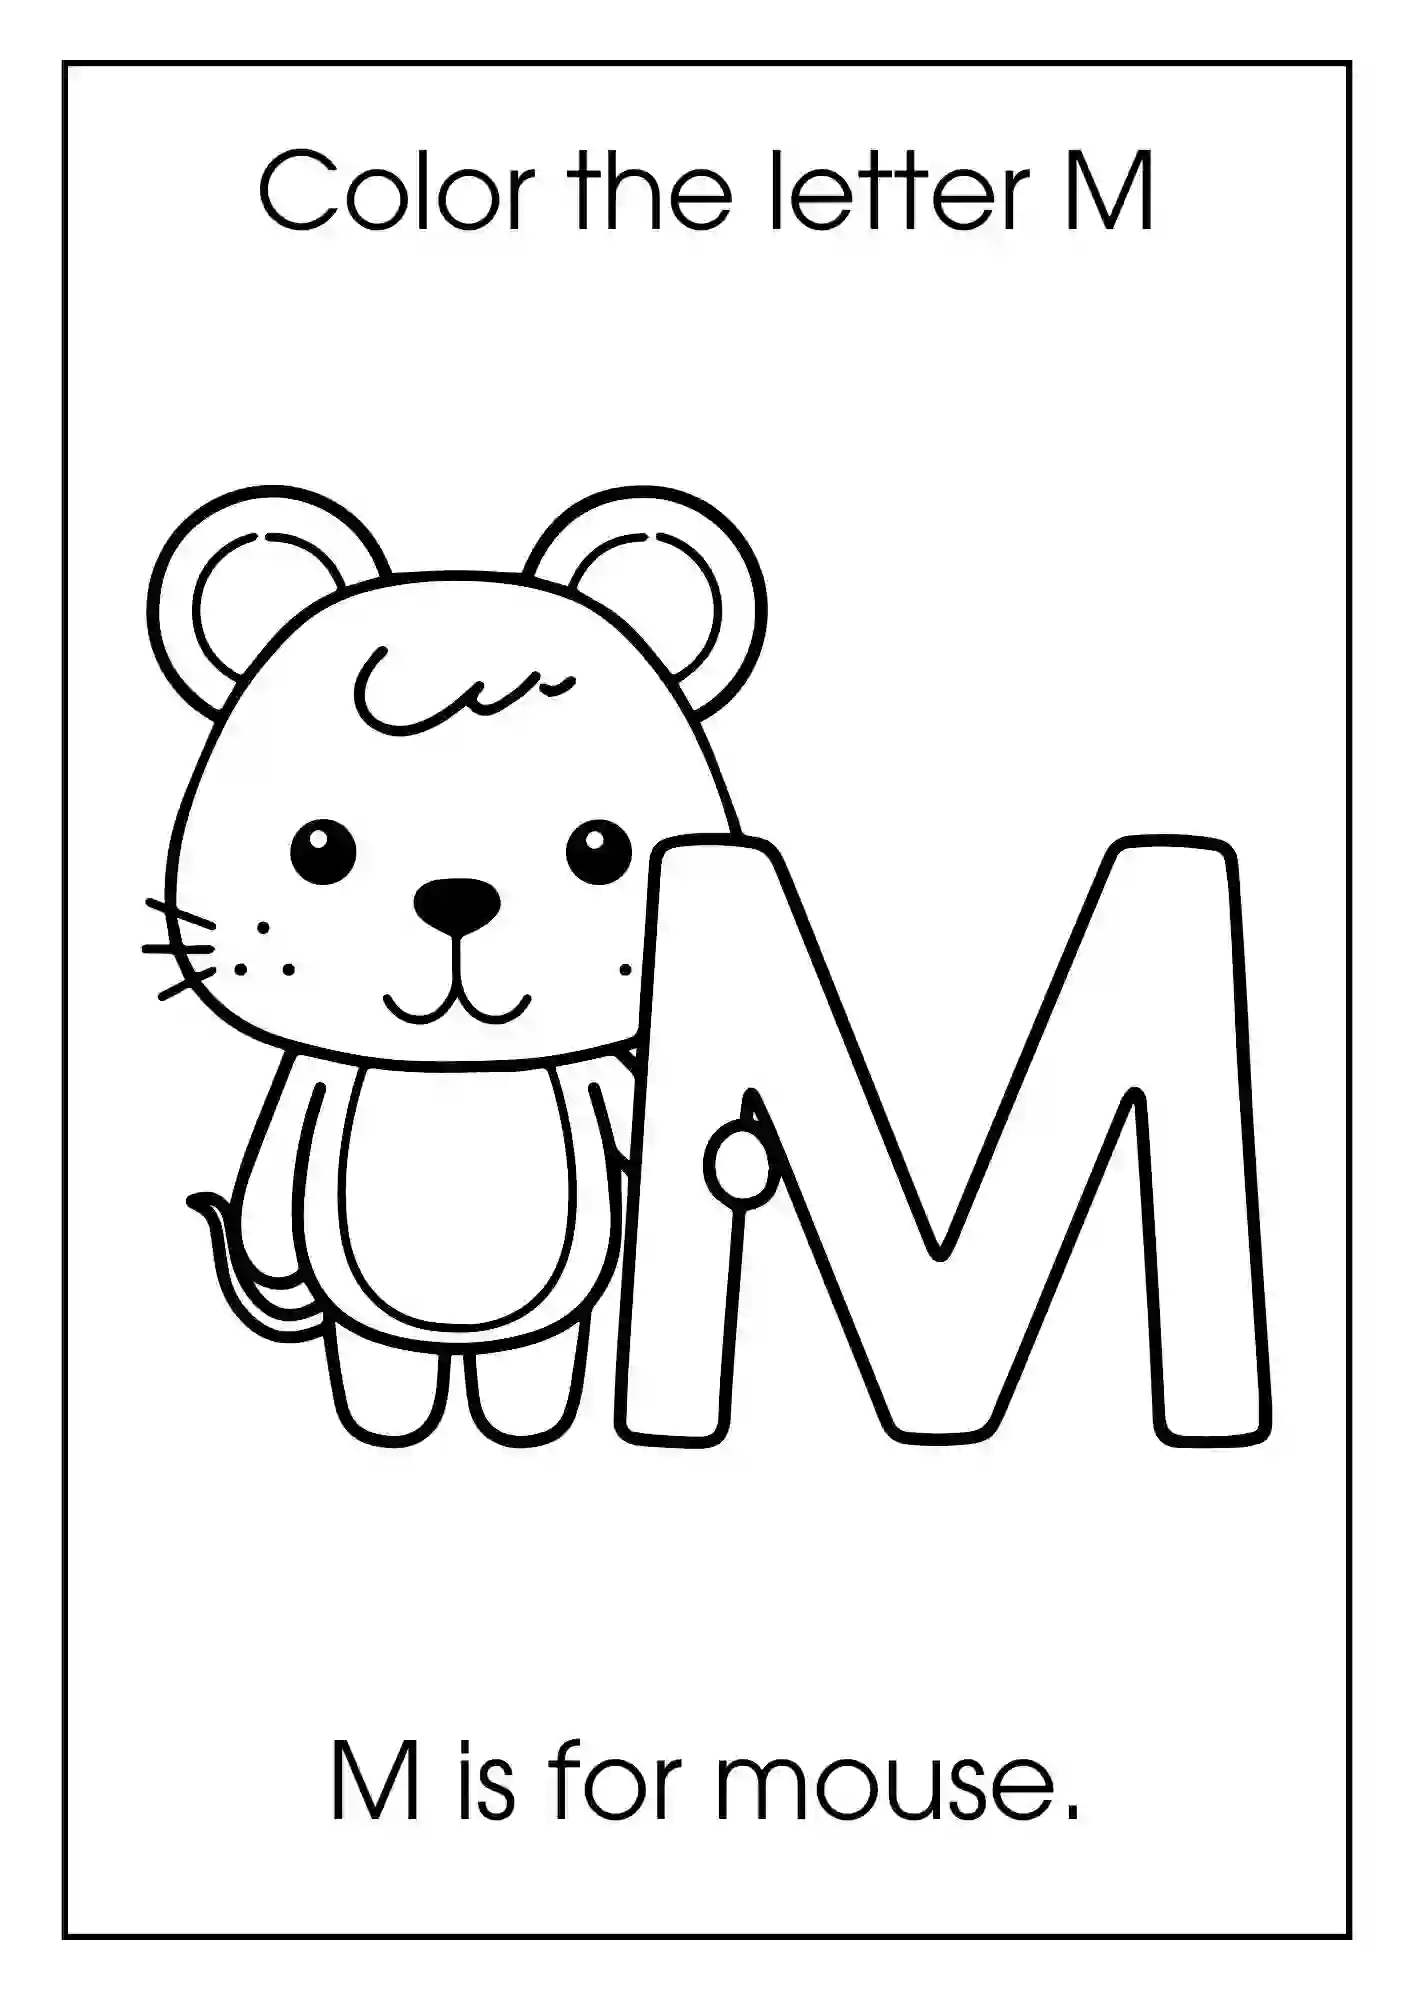 Animal Alphabet Coloring Worksheets For Kindergarten (Letter m with mouse)